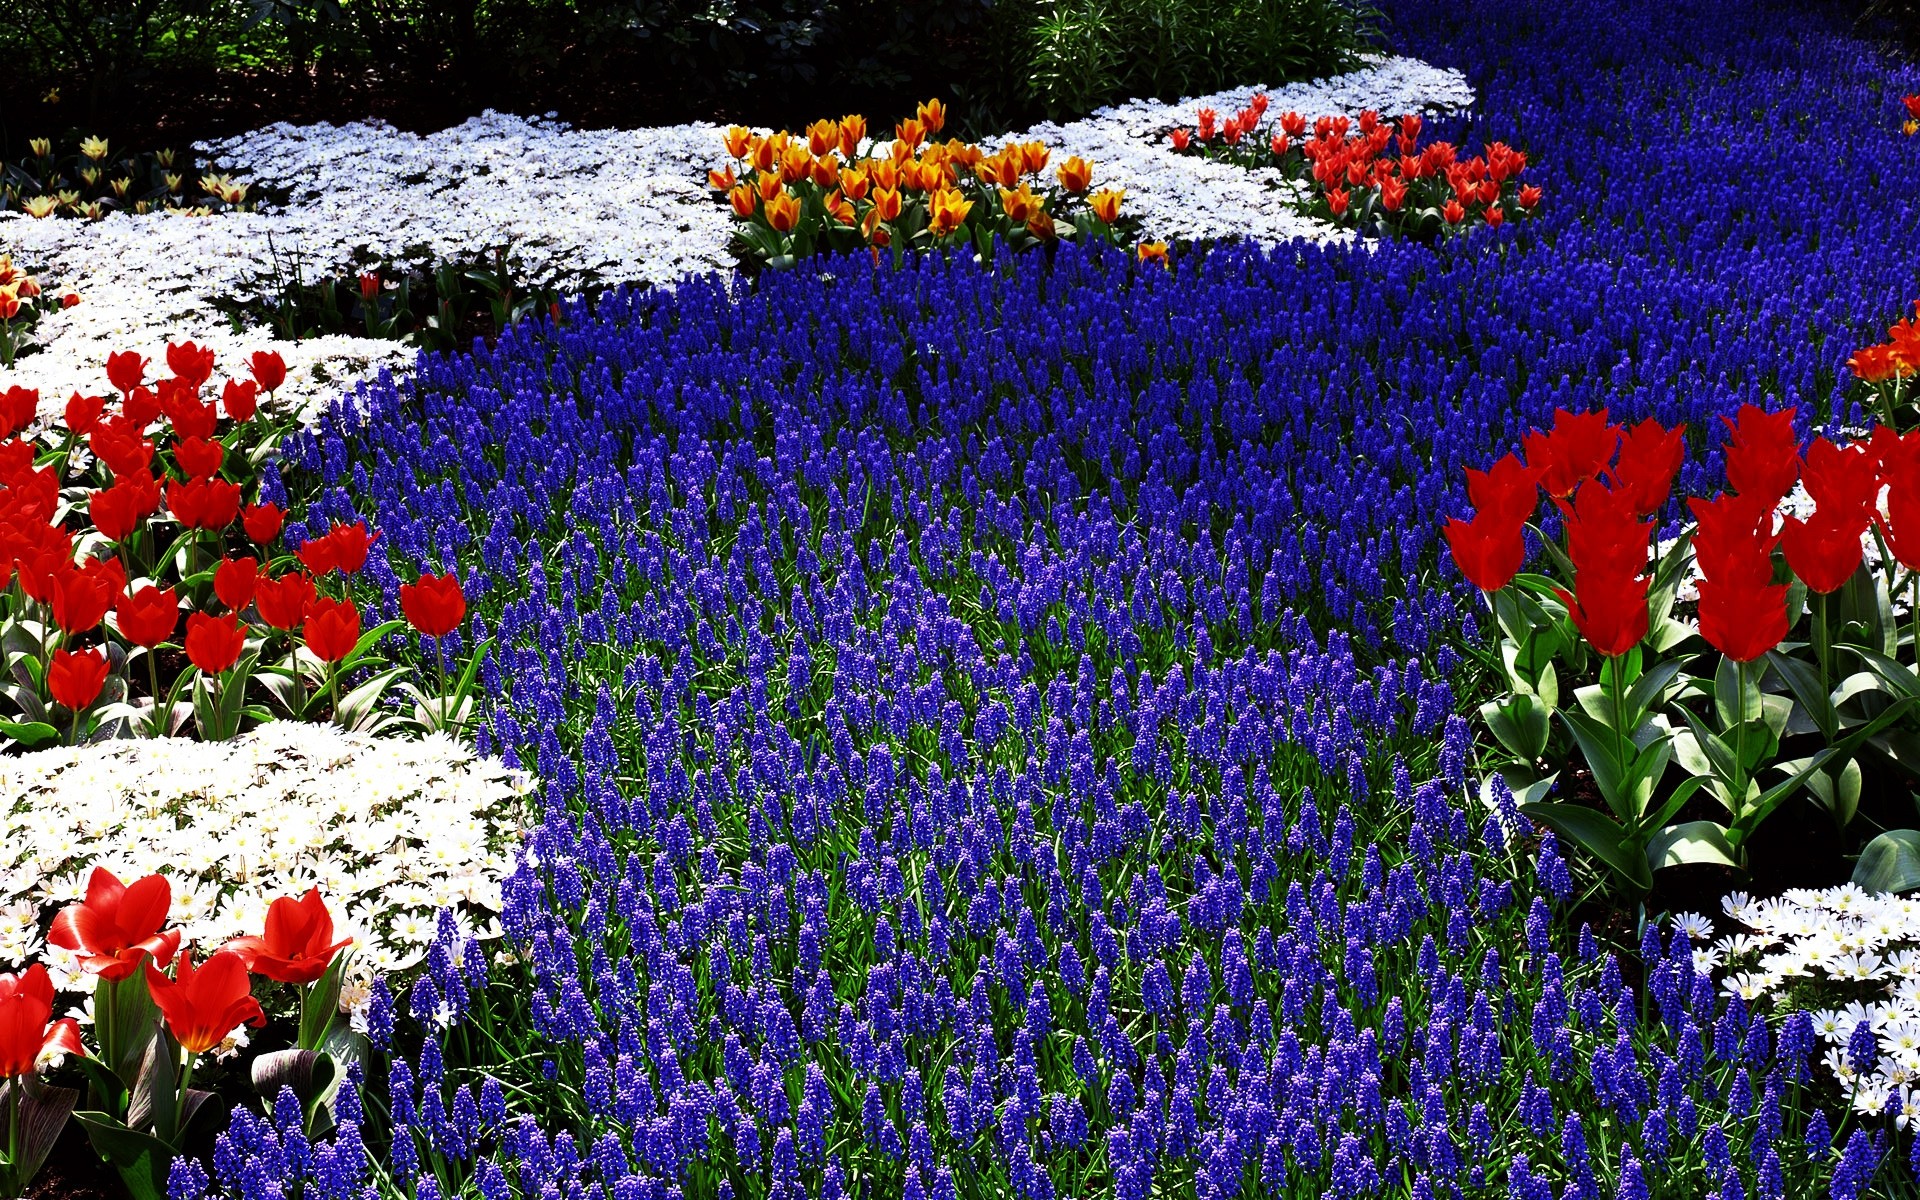 flowers flower garden tulip flora blooming nature floral field outdoors leaf color growth petal season bulb bed hayfield summer springtime red blue white orange plants